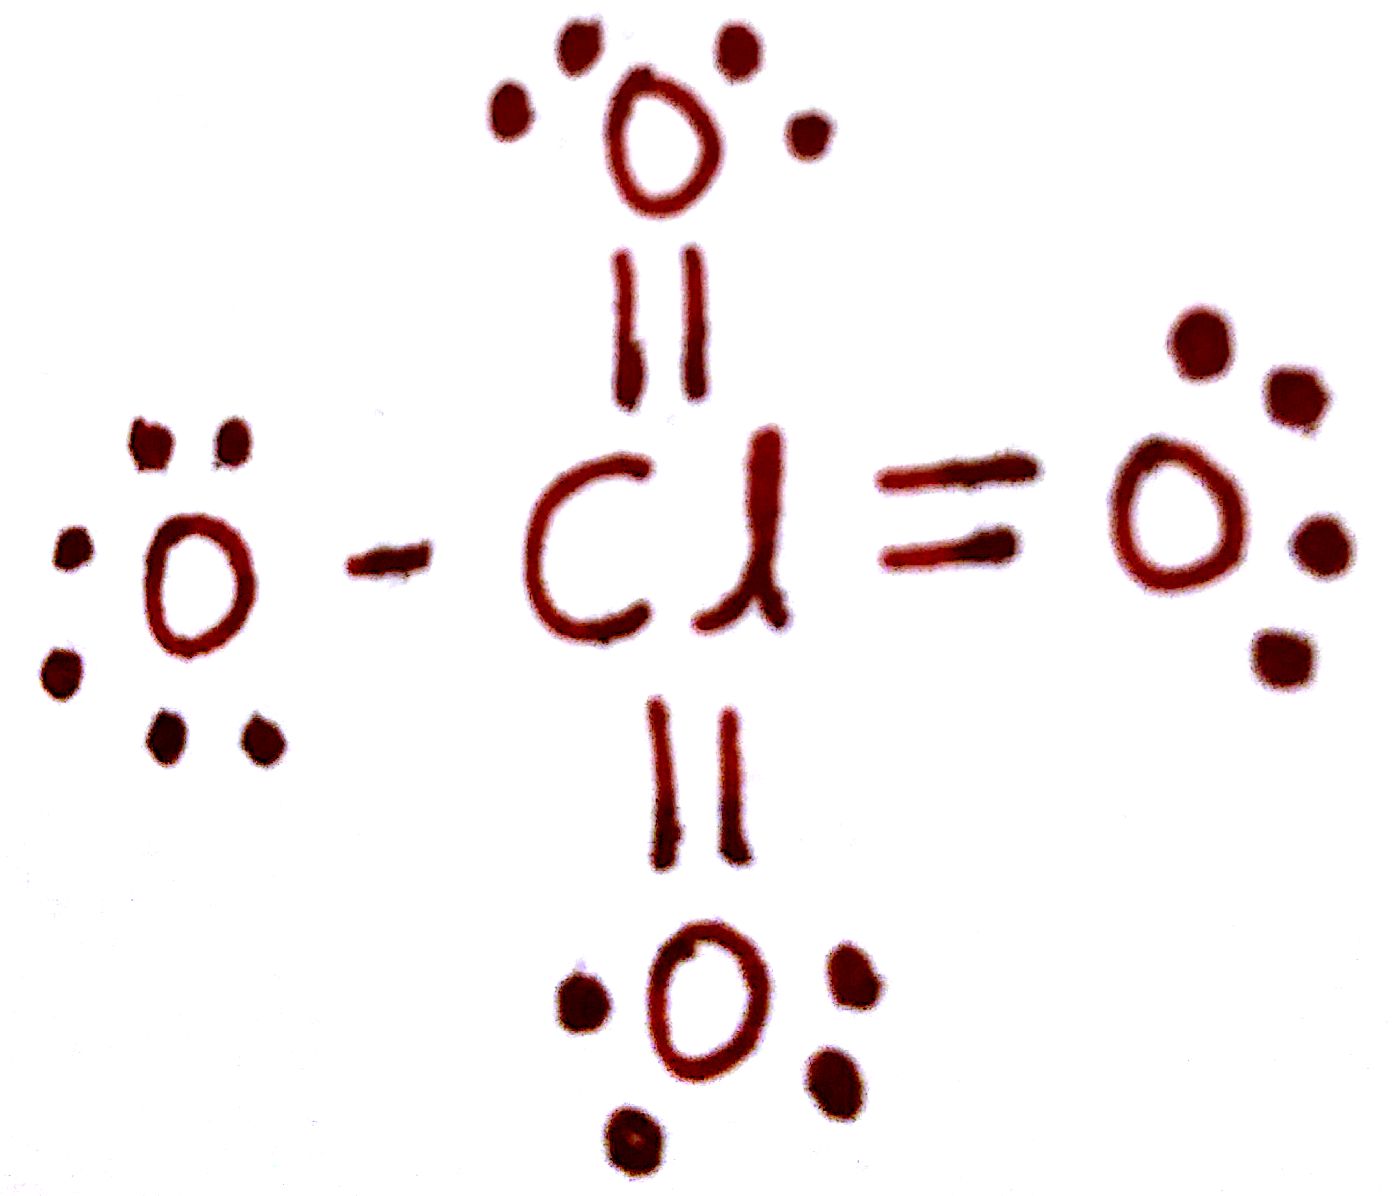 Lewis Clo4 Structures Charge Formal Cl Bonds Io Bonding Clo Chemical Bond G...